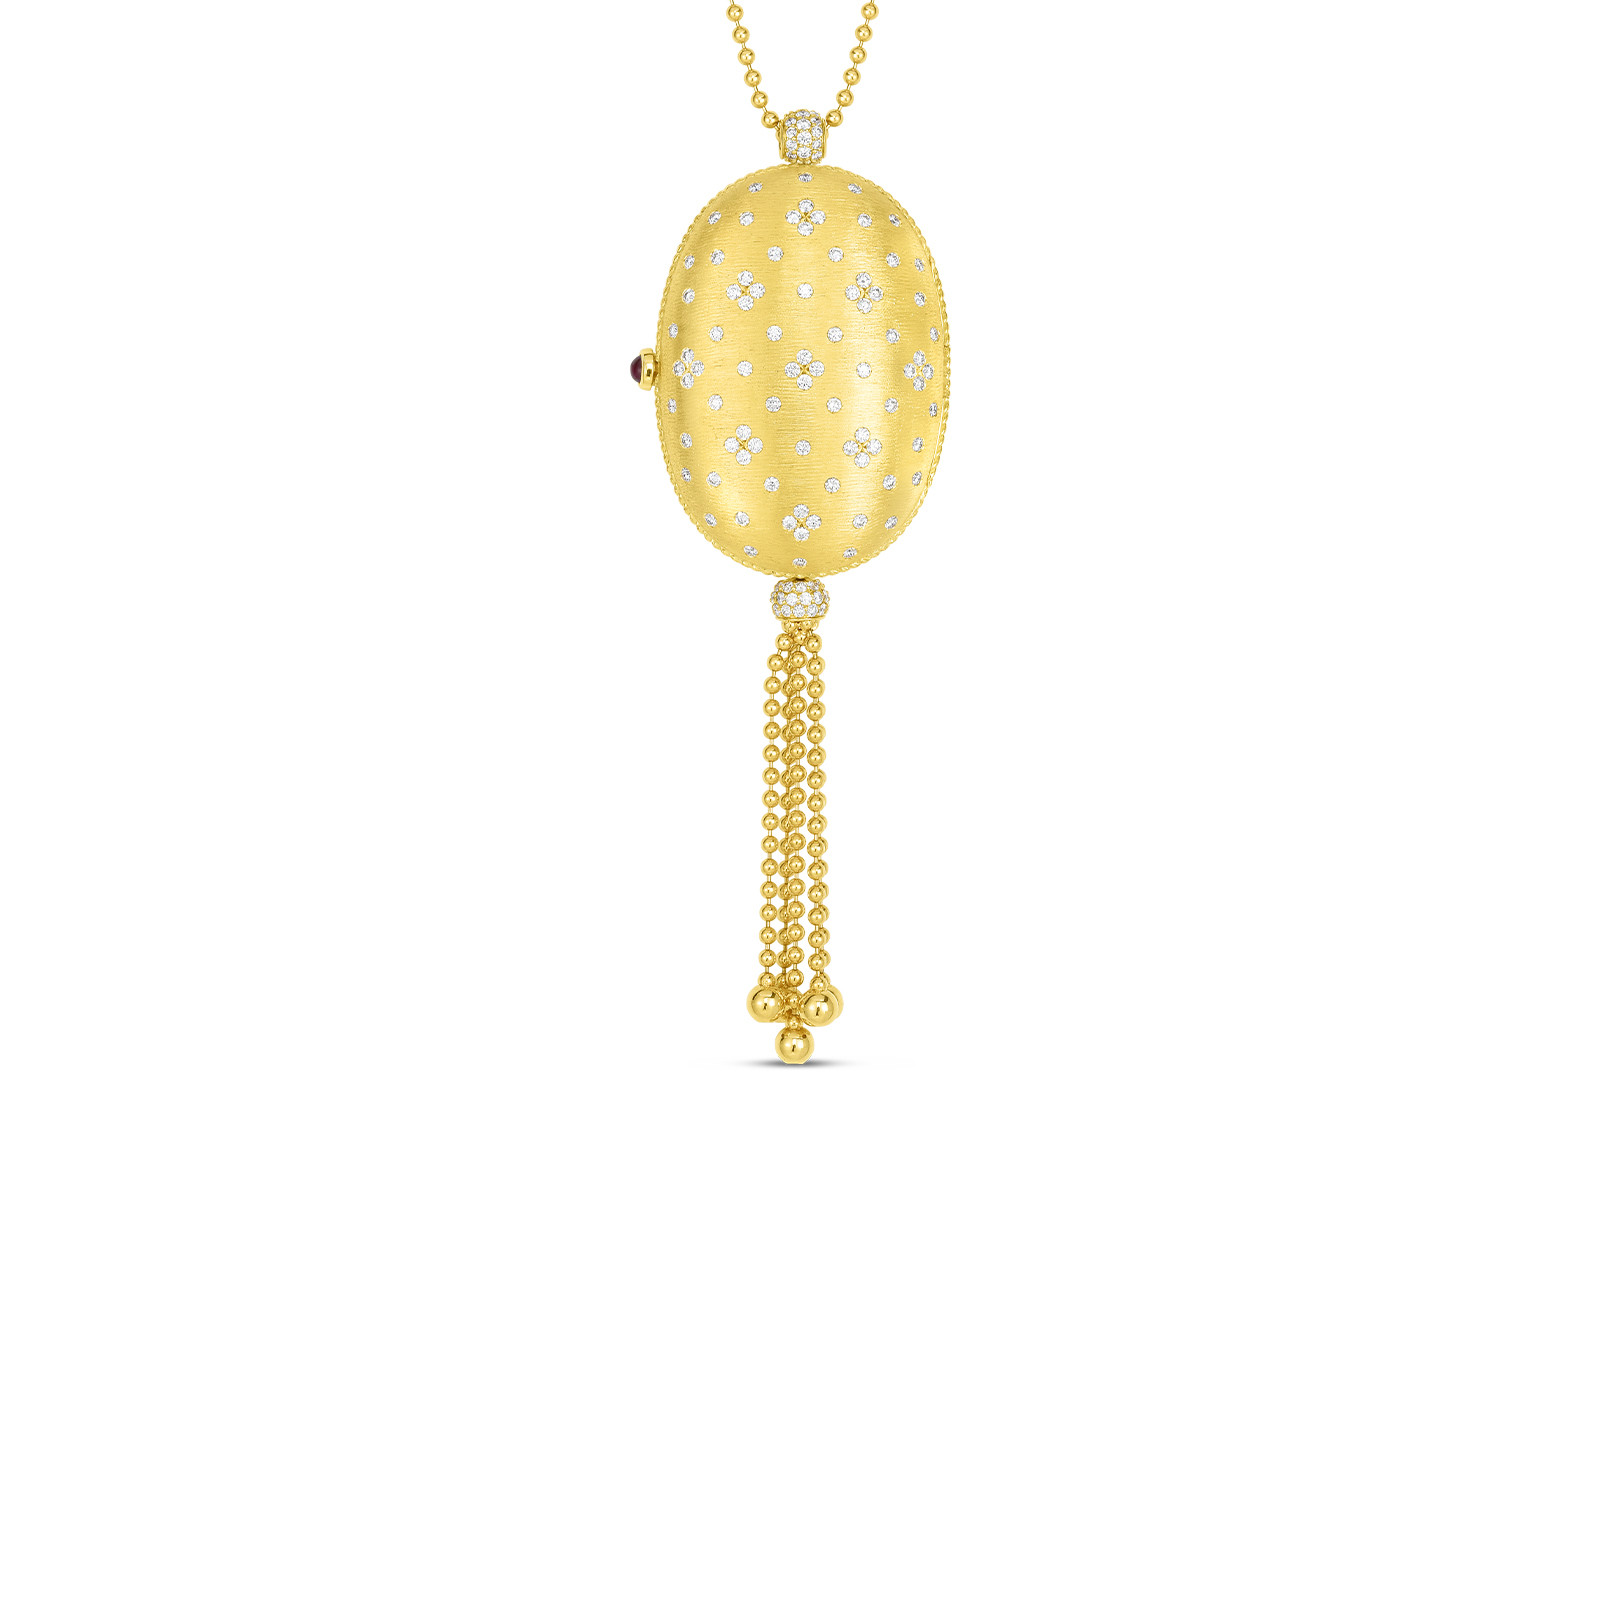 Roberto Coin Venetian Princess Tassel Locket Necklace in 18K Gold front view